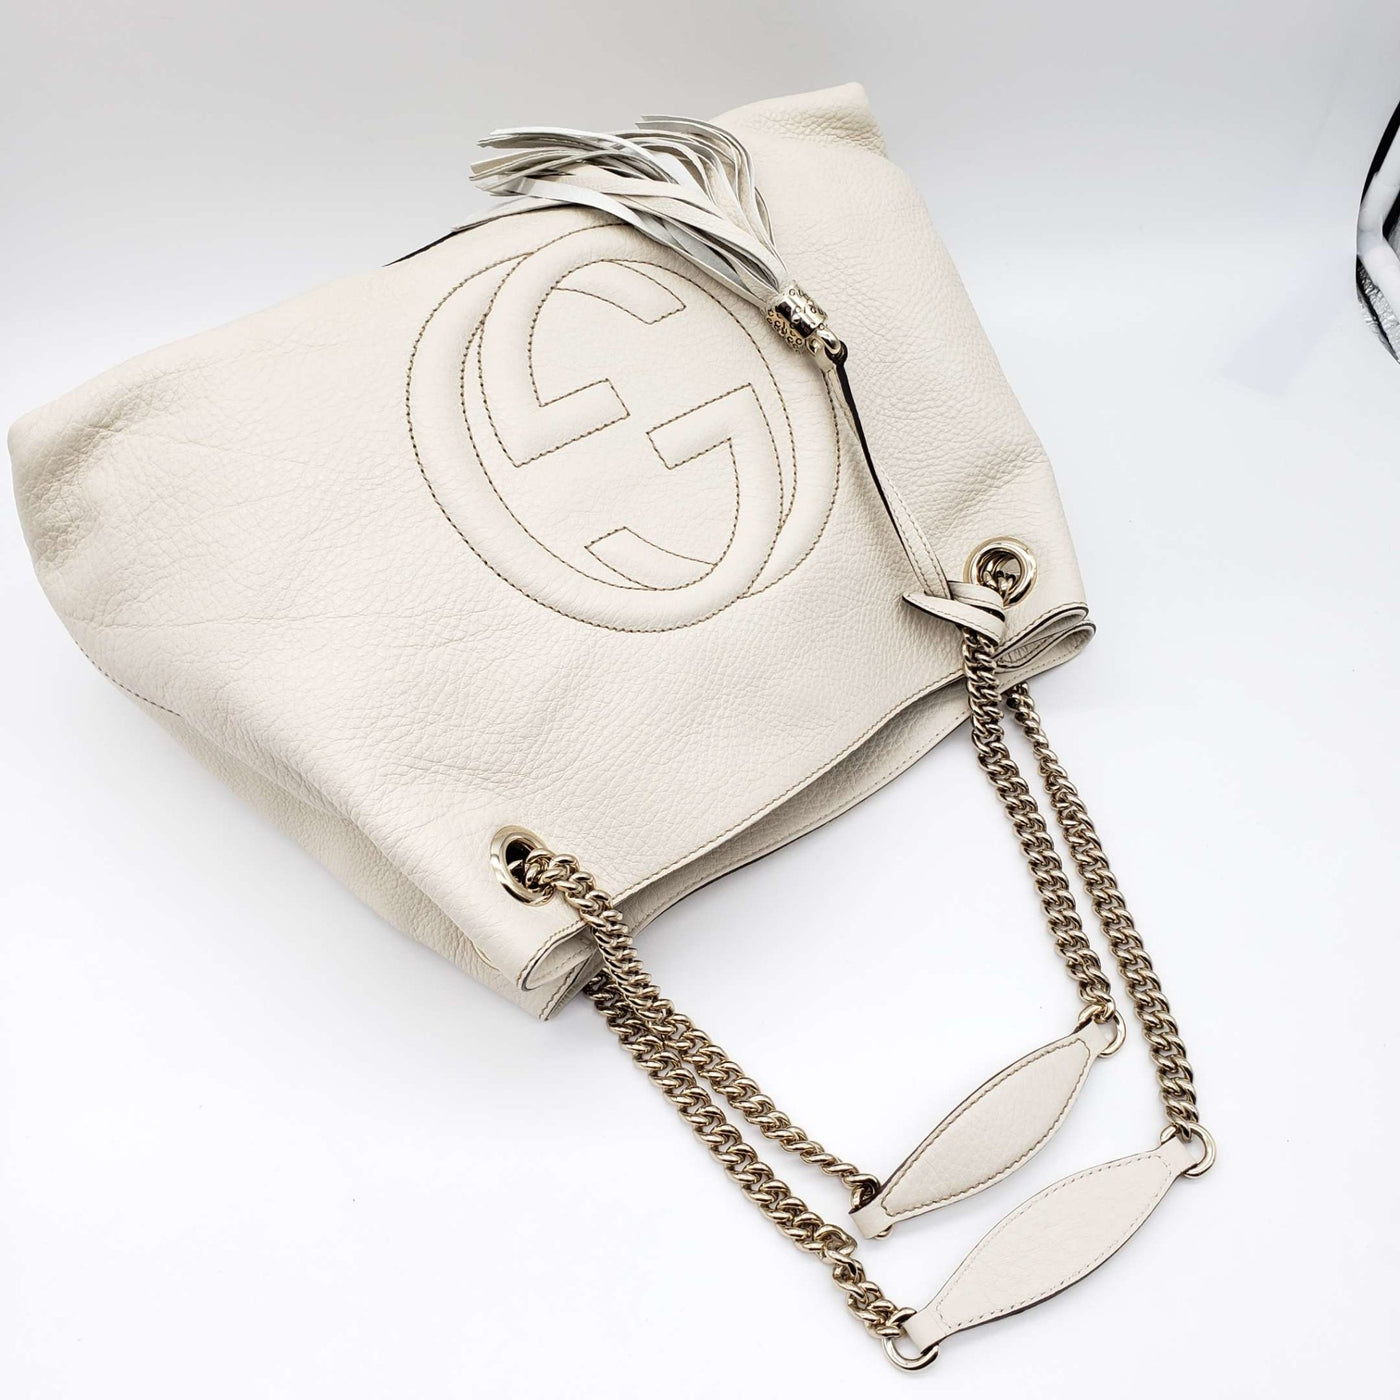 Gucci GG Soho on Chain Medium White Shoulder Bag - Luxury Cheaper